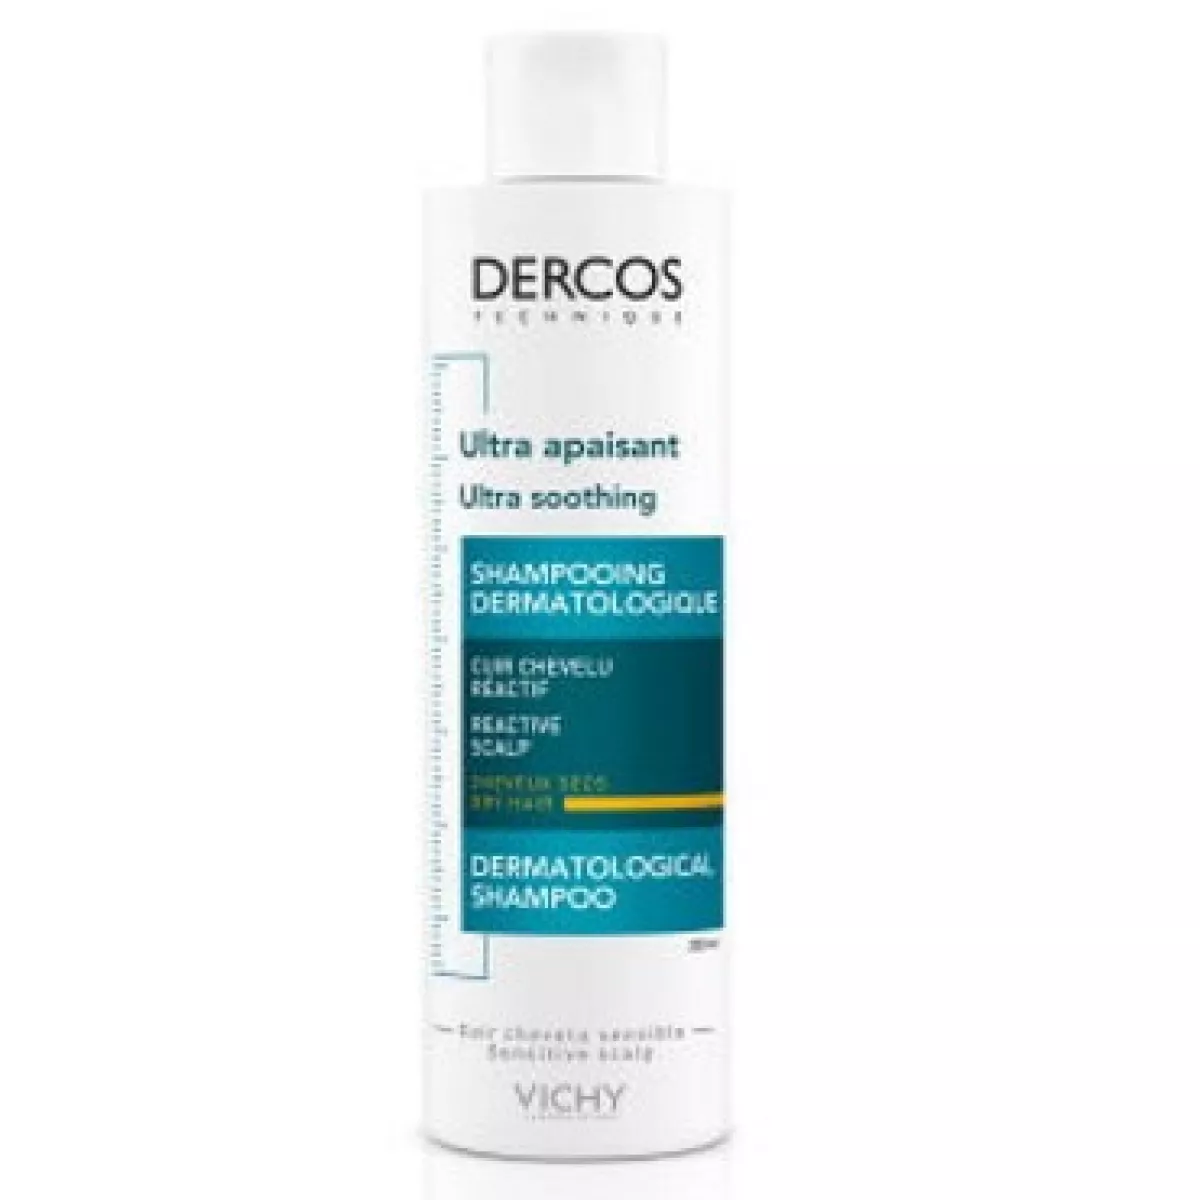 #1 - Vichy Dercos Ultra Soothing Shampoo - Dry Hair - 200 ml